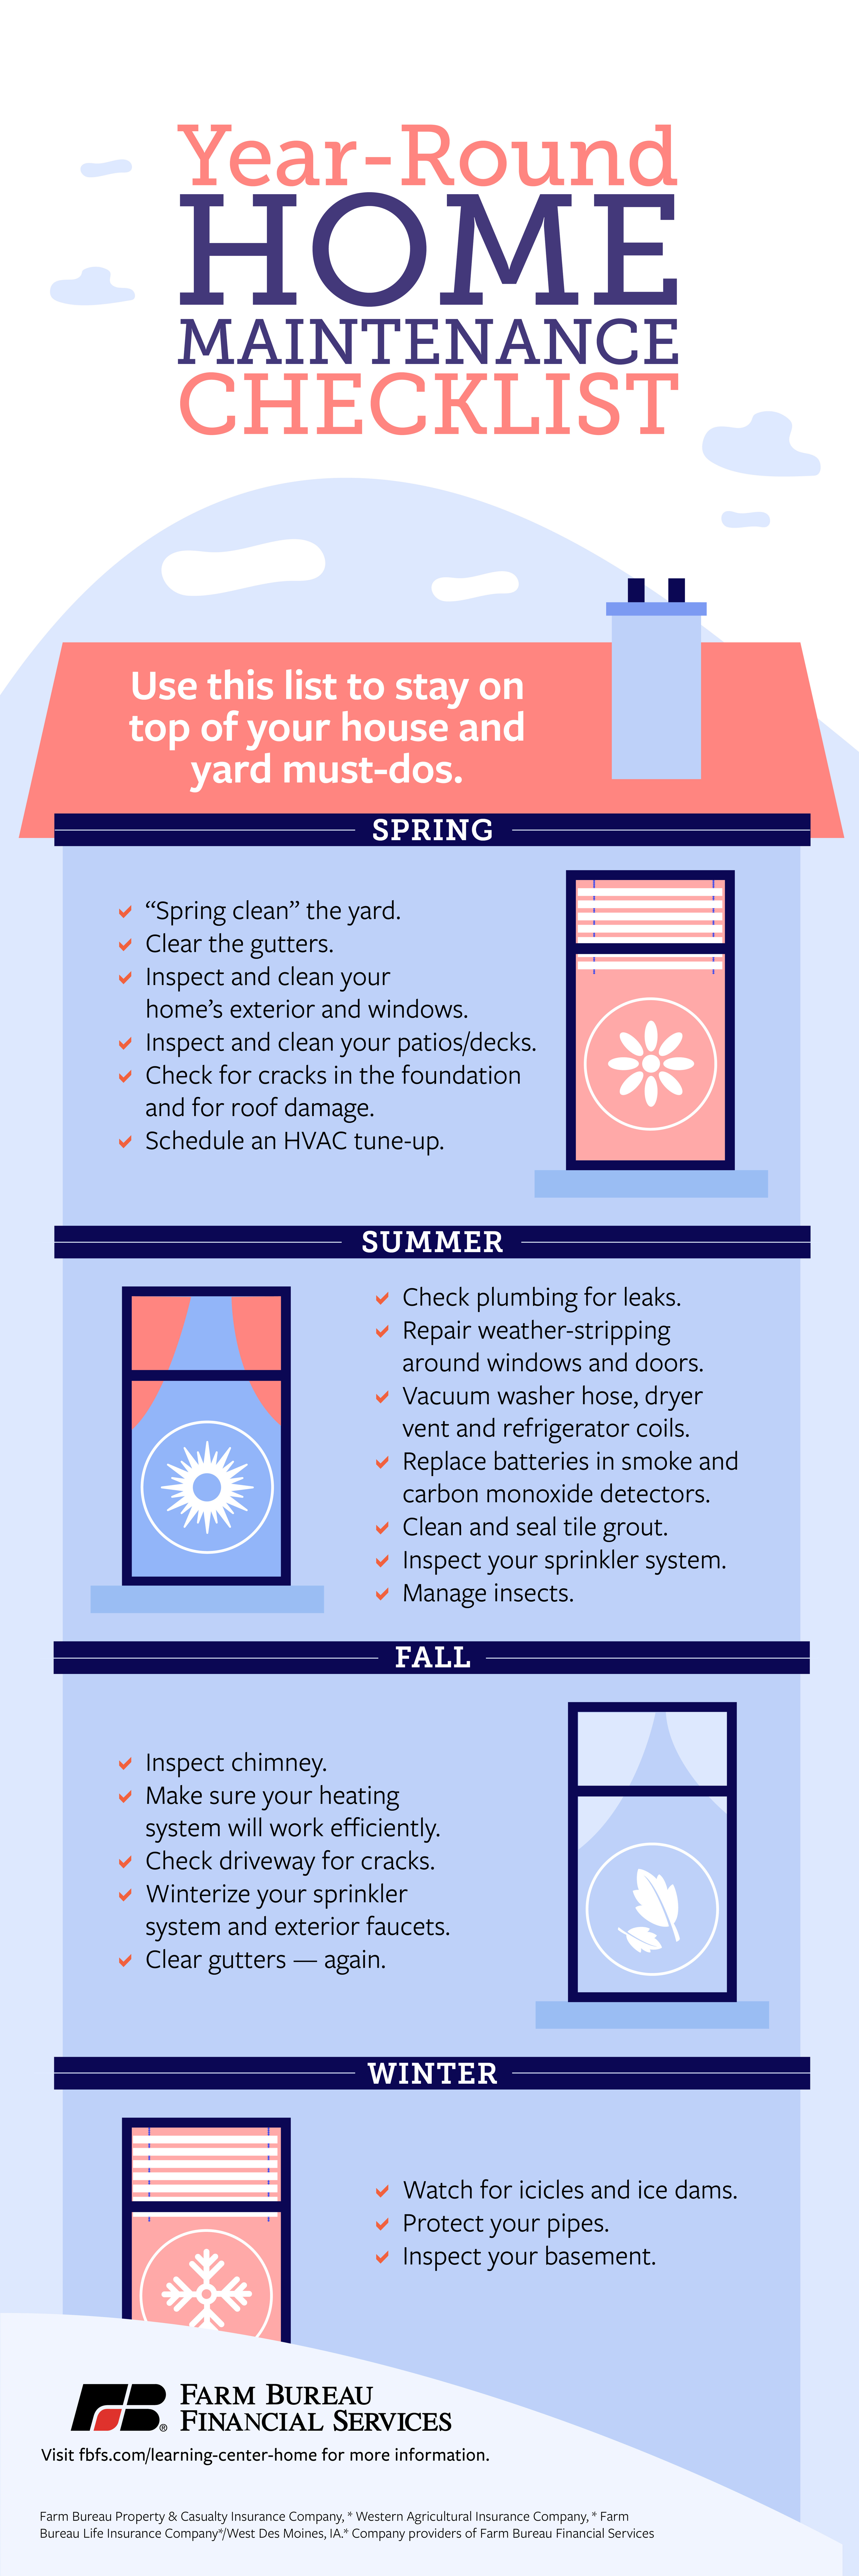 Your Year-Round Home Maintenance Checklist and Schedule